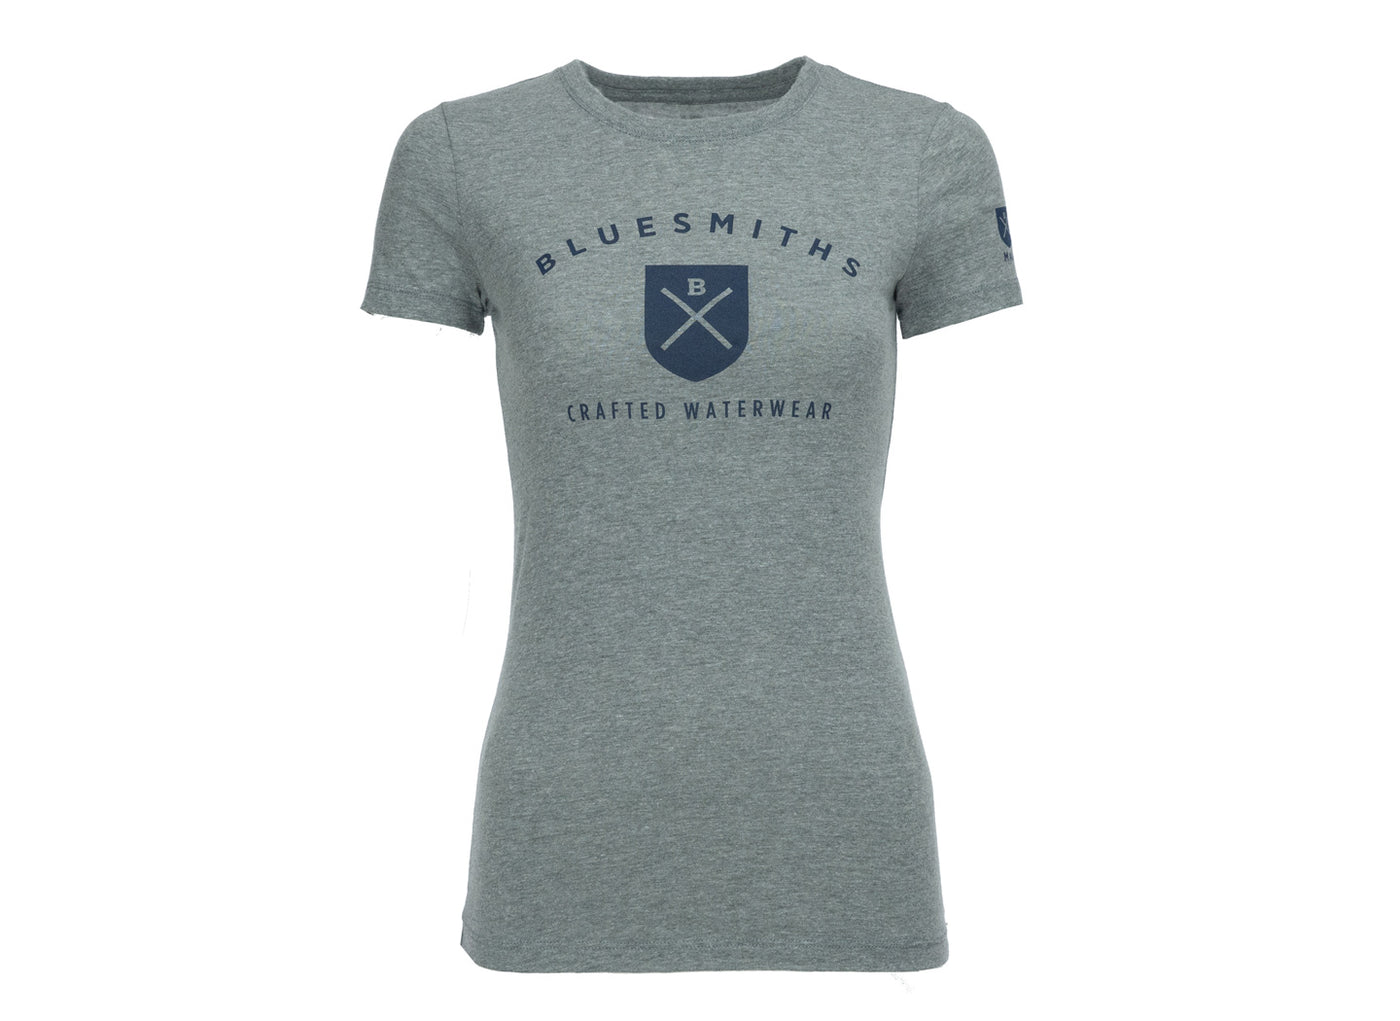 Bluesmiths Crafted Waterwear Logo Tee Shirt for Women - Heather Grey